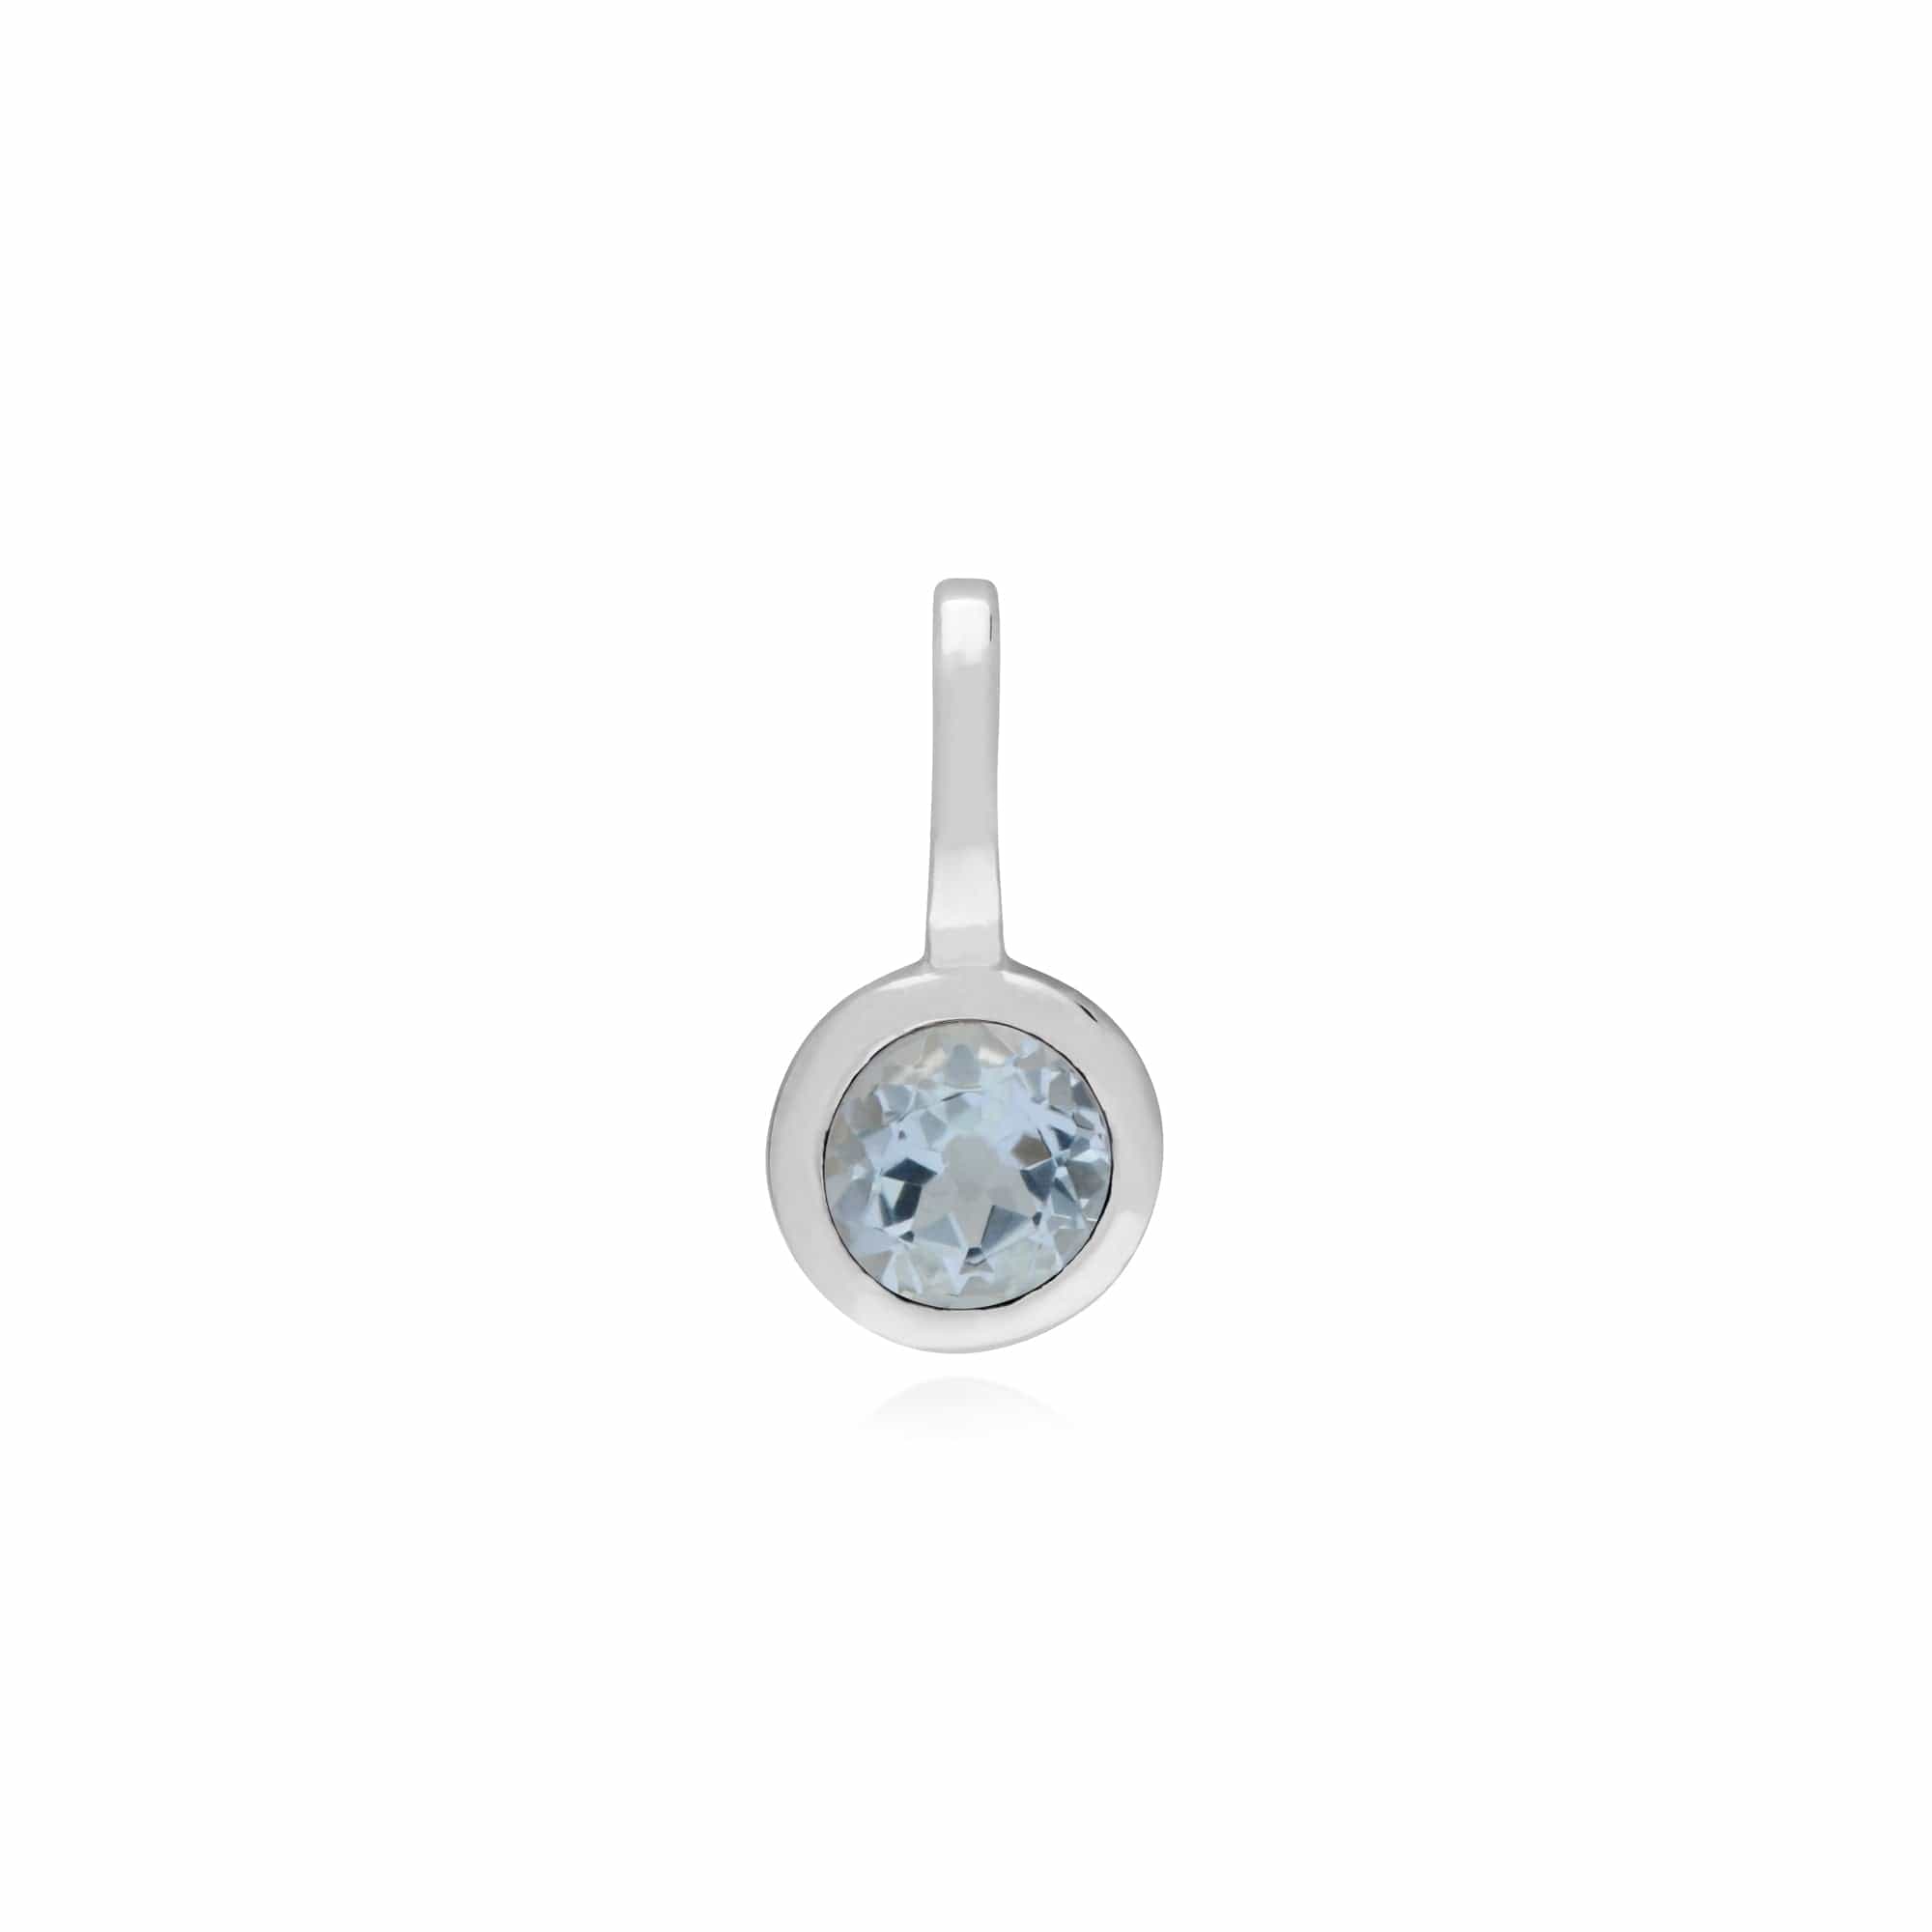 270P027607925-270P026601925 Classic Swirl Heart Lock Pendant & Aquamarine Charm in 925 Sterling Silver 2